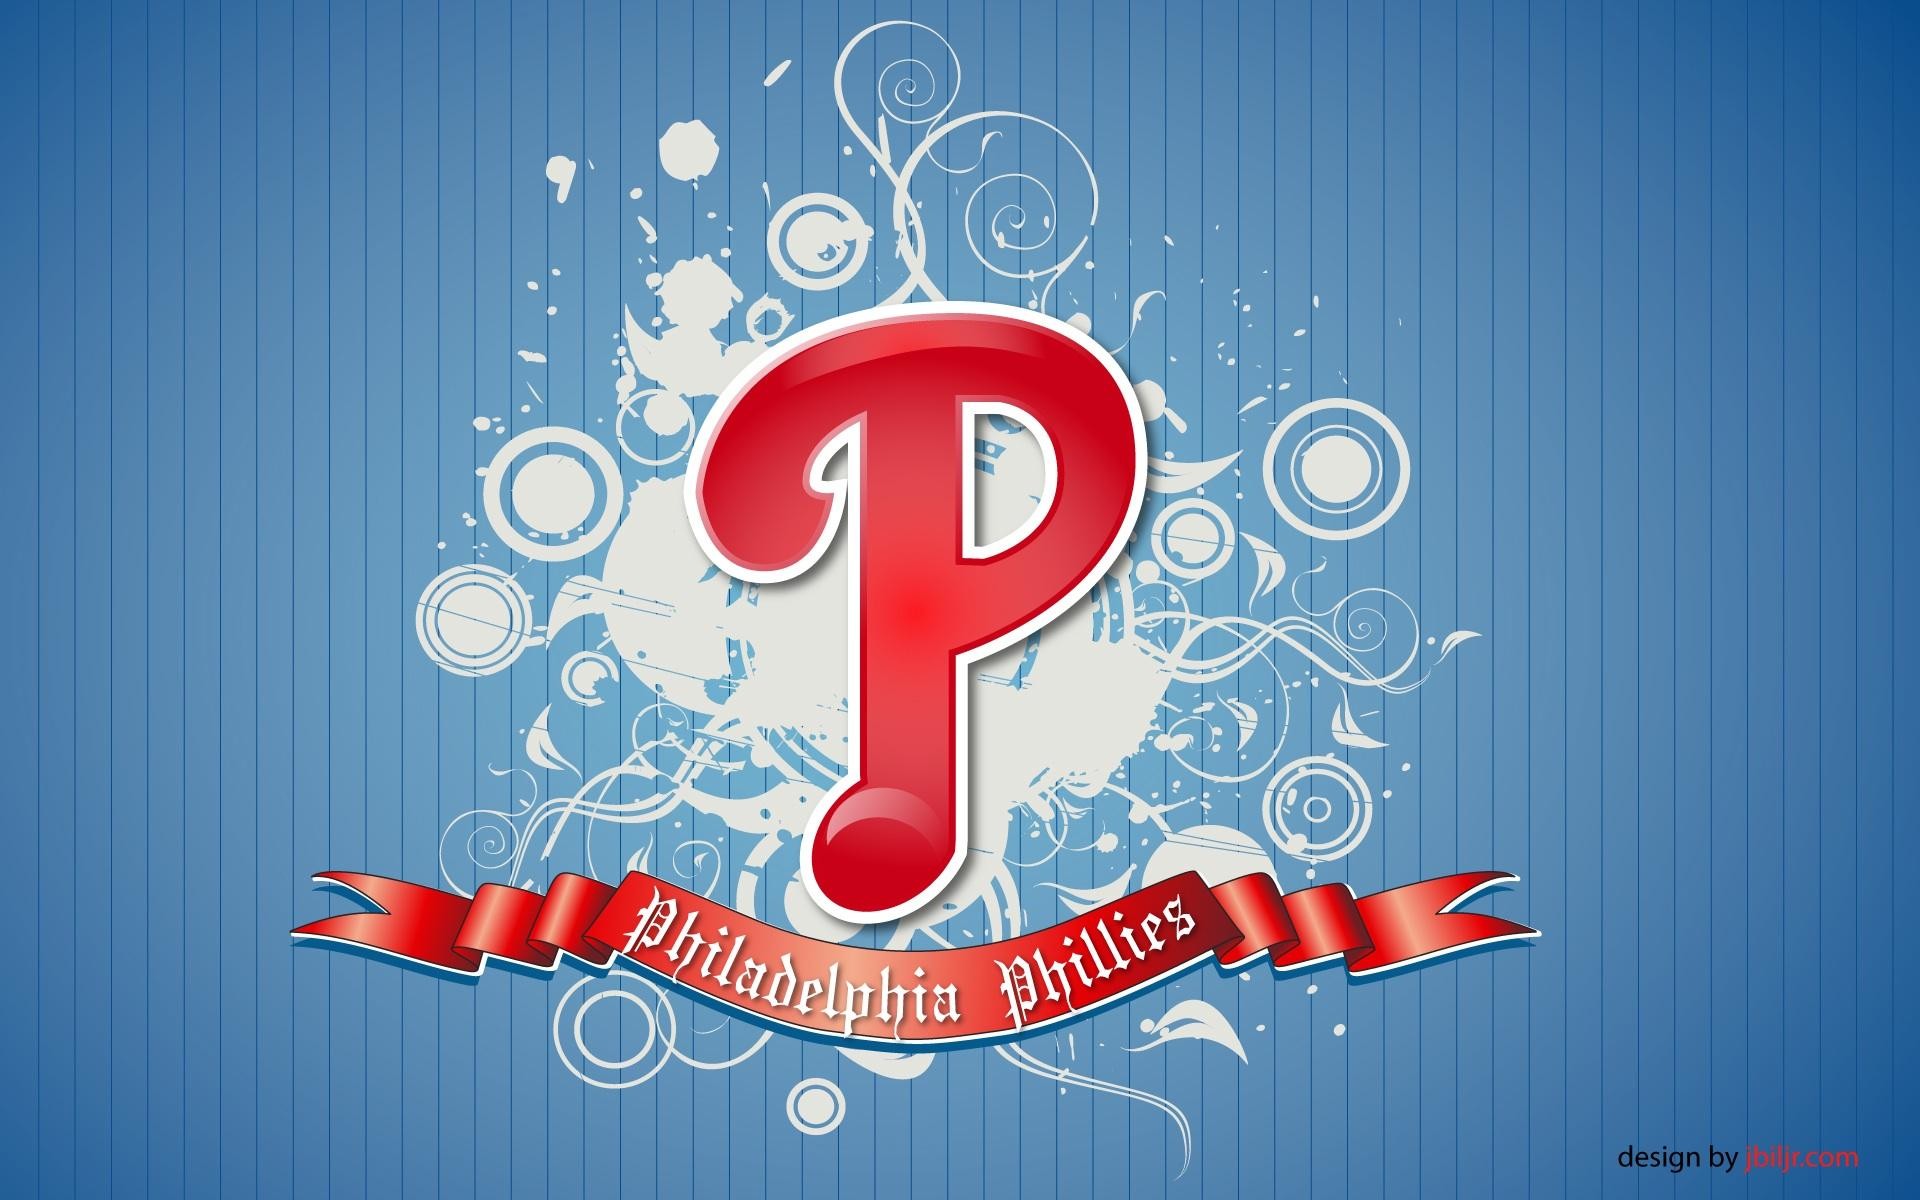 Philadelphia Phillies on X New season New wallpaper OpeningDay   RingTheBell httpstcoMzJYF6RiEQ  X